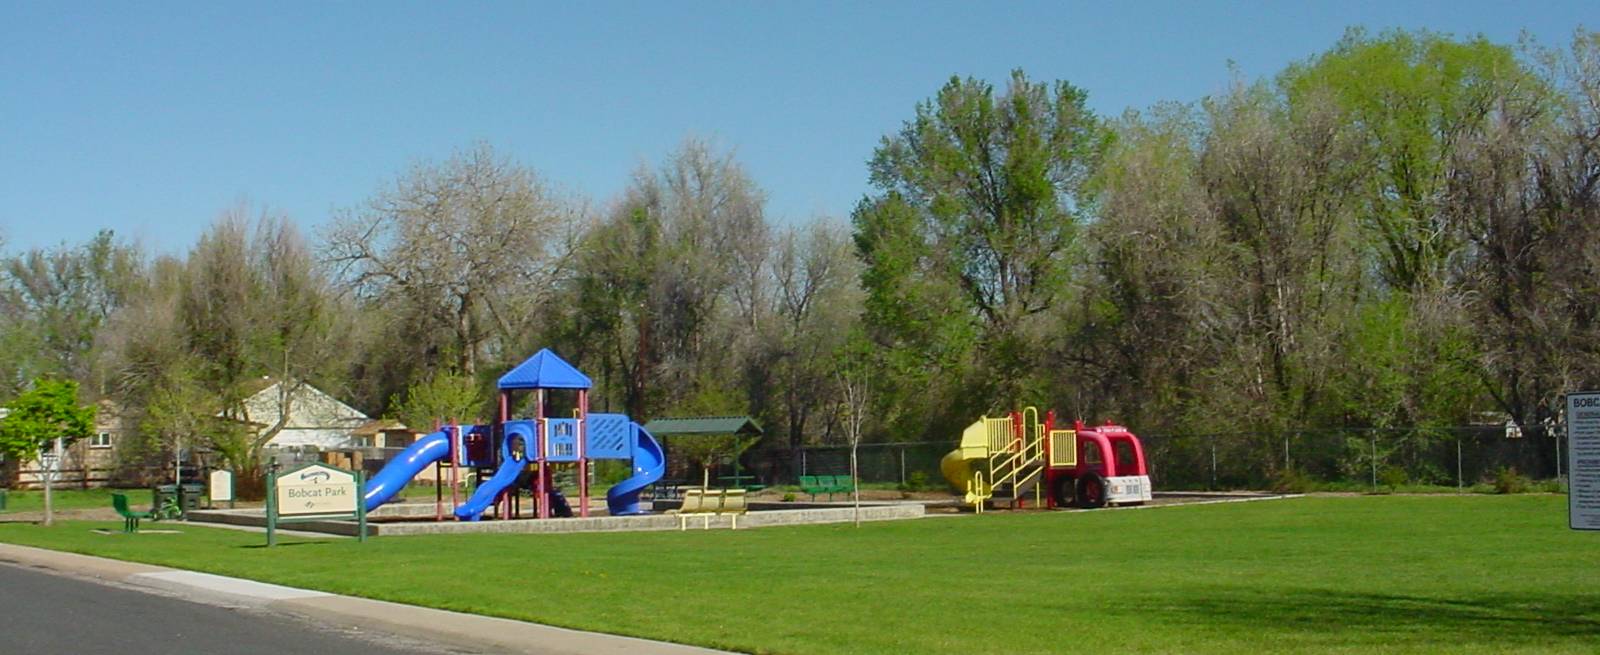 Picture of Bobcat Park